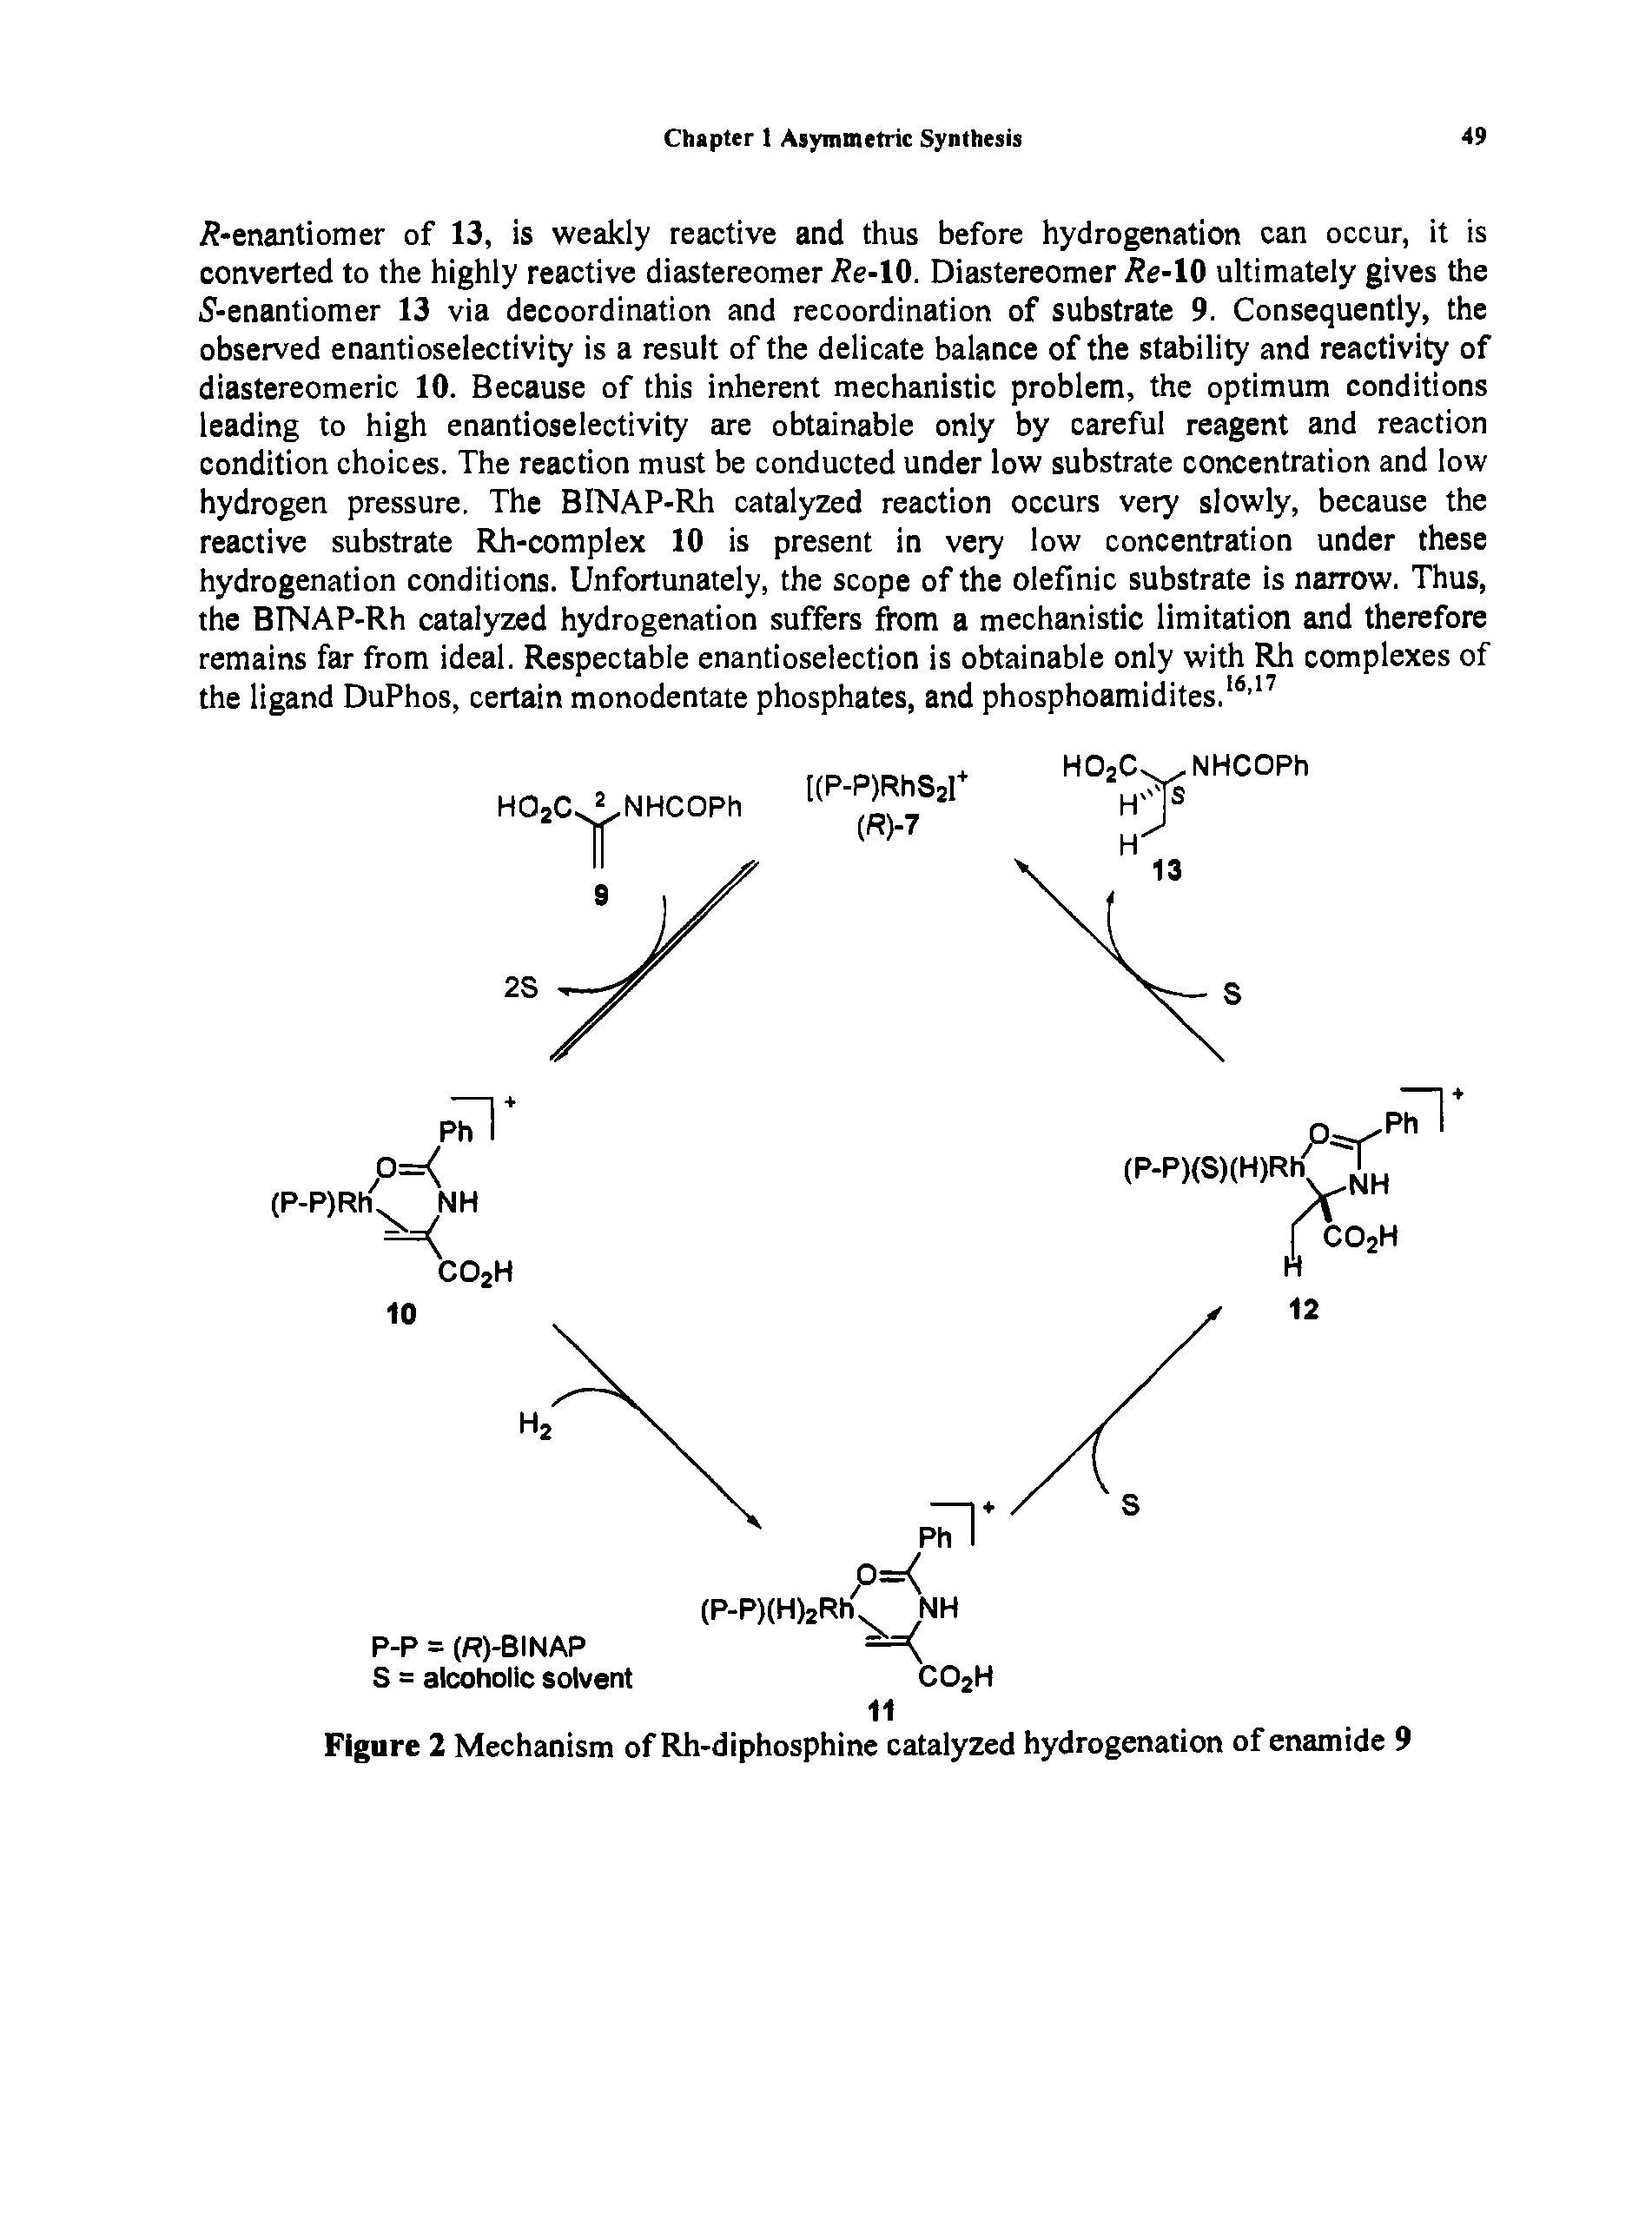 Figure 2 Mechanism of Rh-diphosphine catalyzed hydrogenation ofenamide 9...